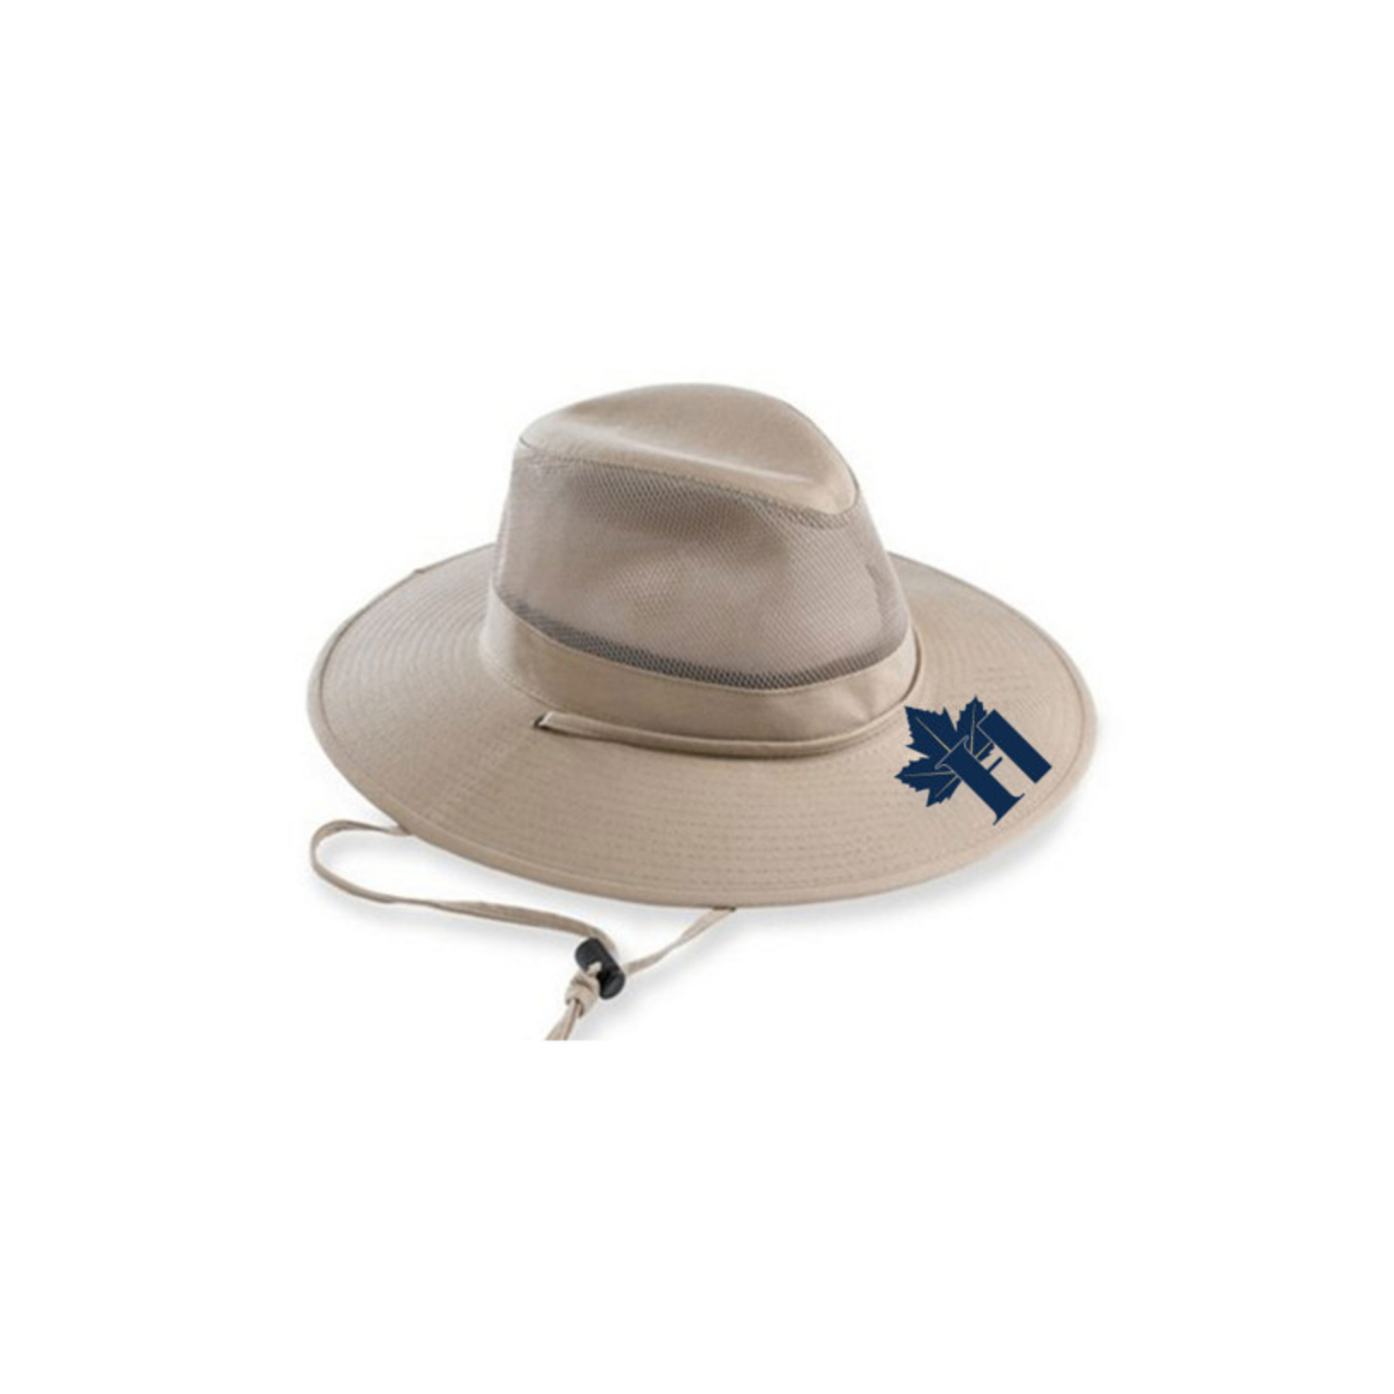 Hillenmeyer Safari Hat